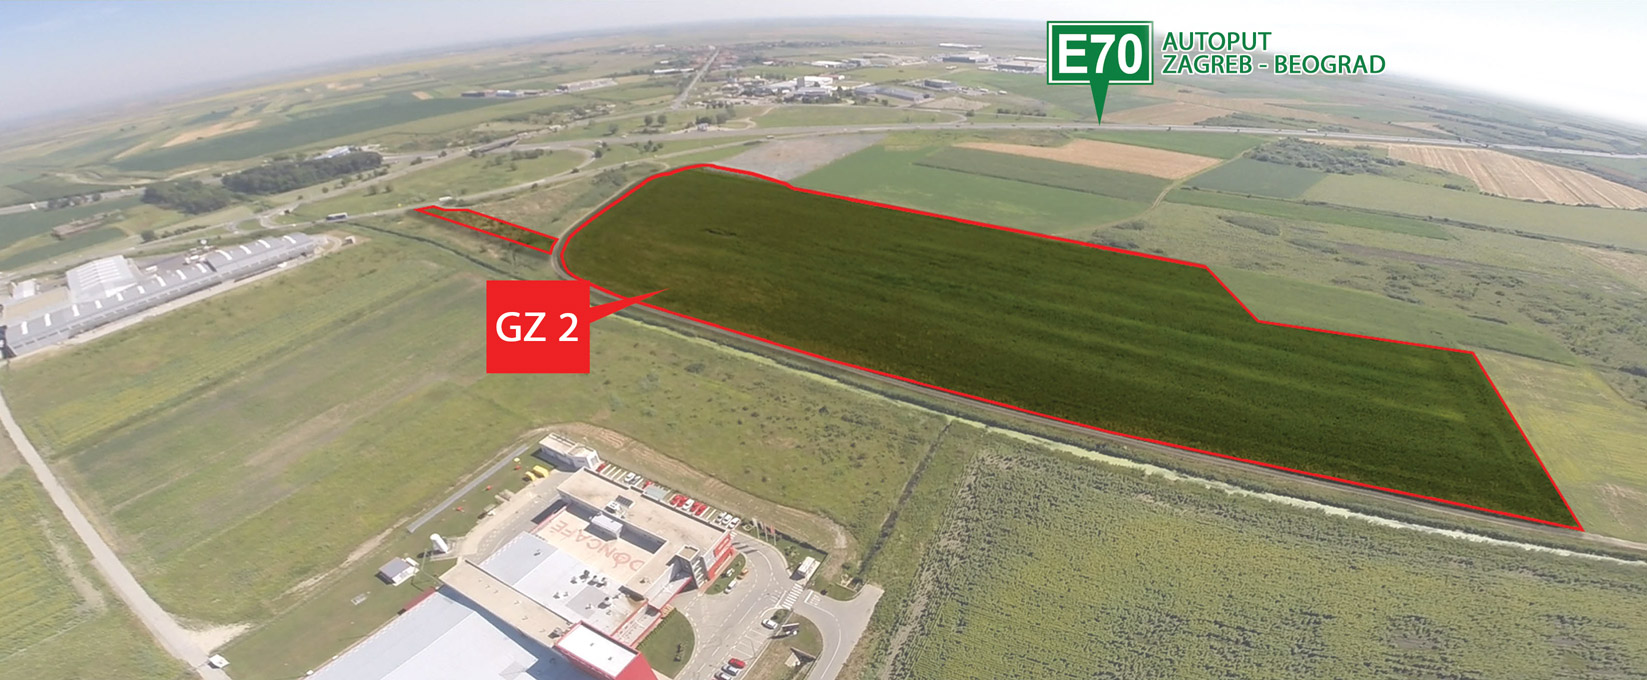 Građevinsko zemljište GZ2, prodaja zemljišta